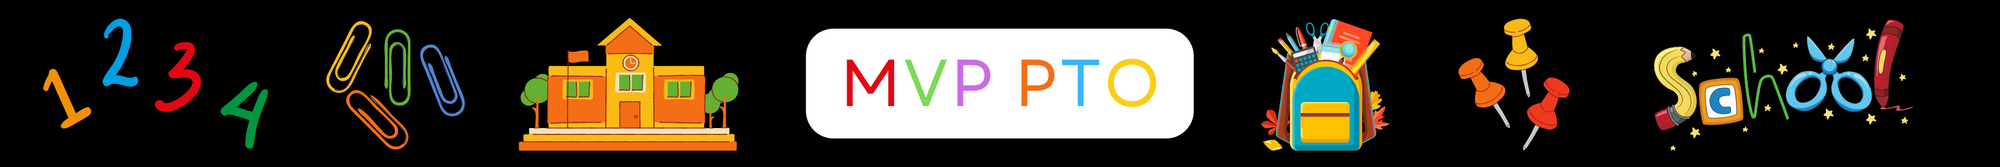 MVP PTO page